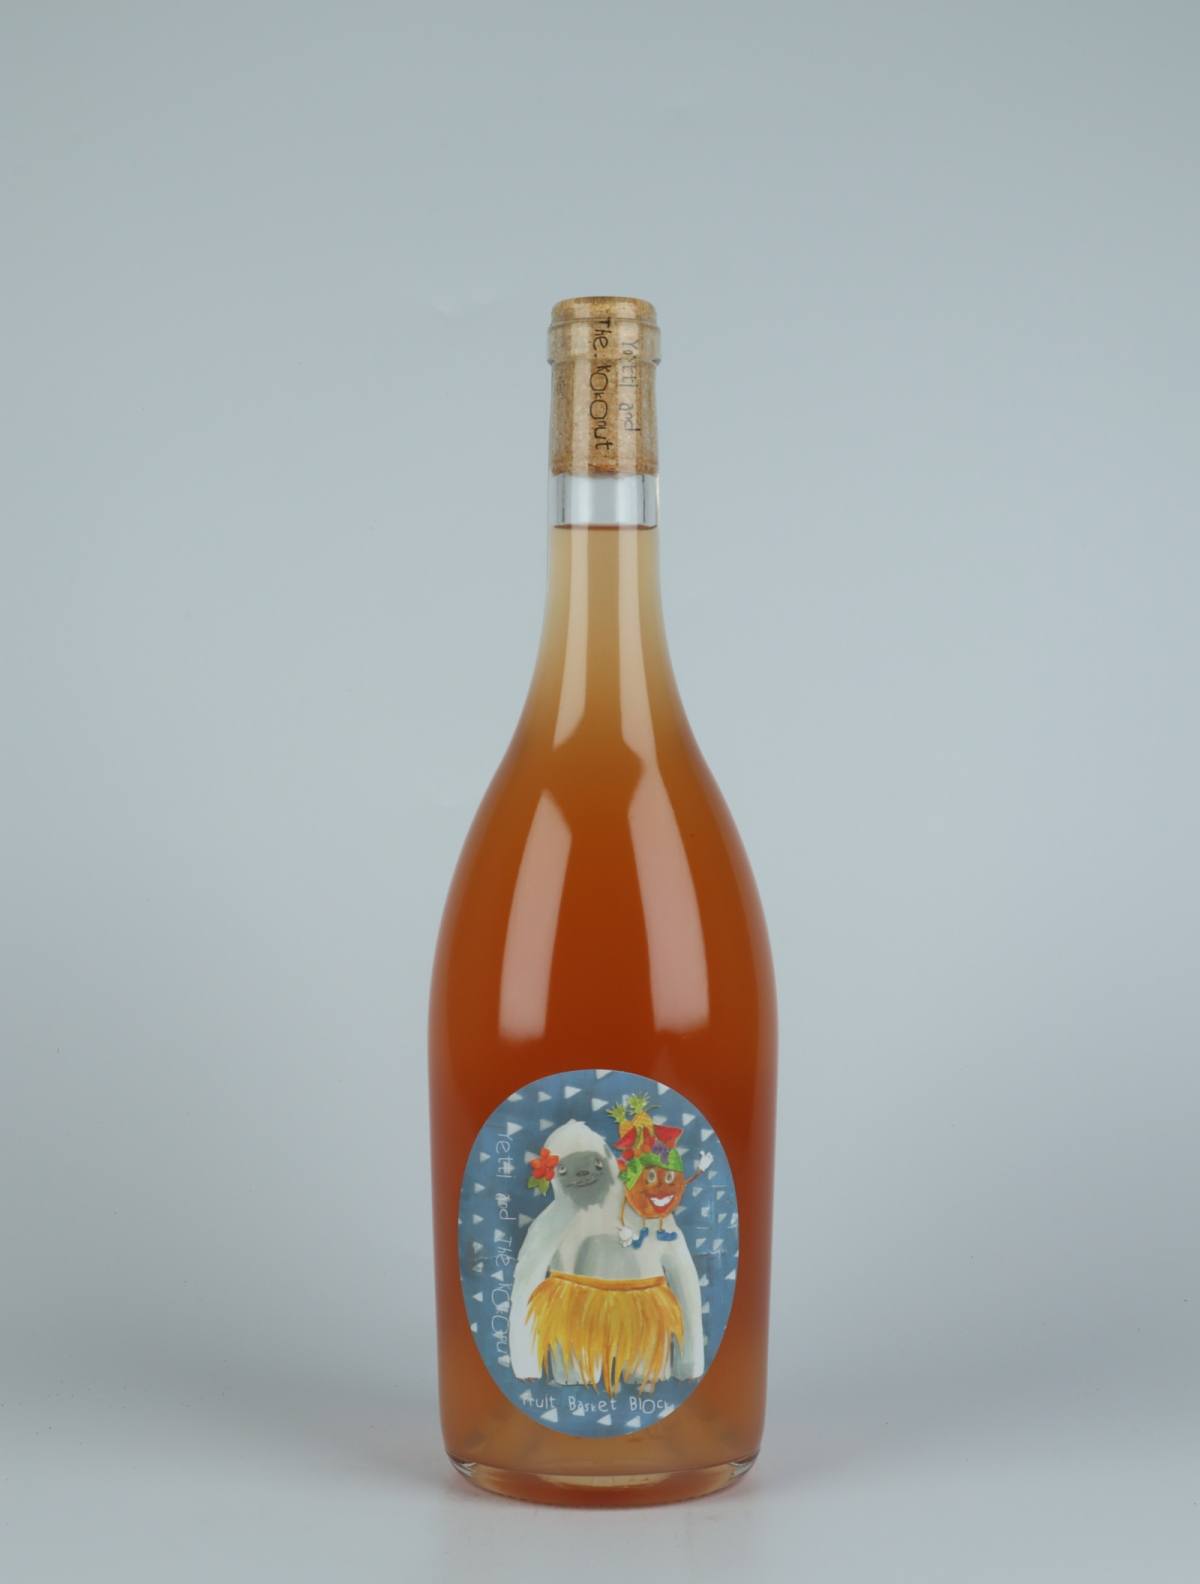 A bottle 2021 Fruit Basket Orange wine from Yetti and the Kokonut, Adelaide Hills in Australia